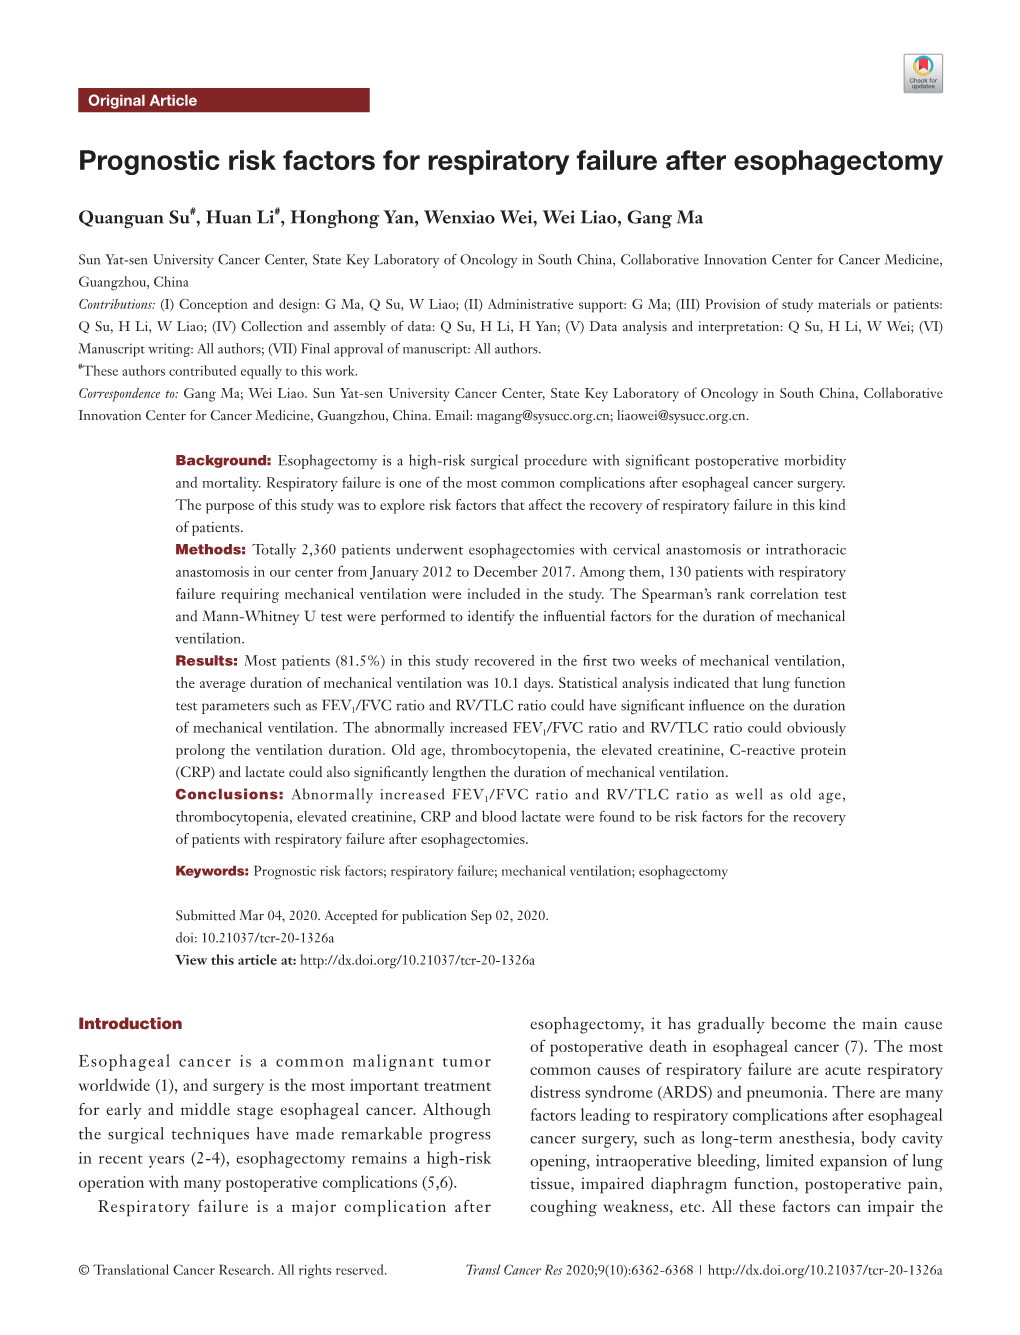 Prognostic Risk Factors for Respiratory Failure After Esophagectomy